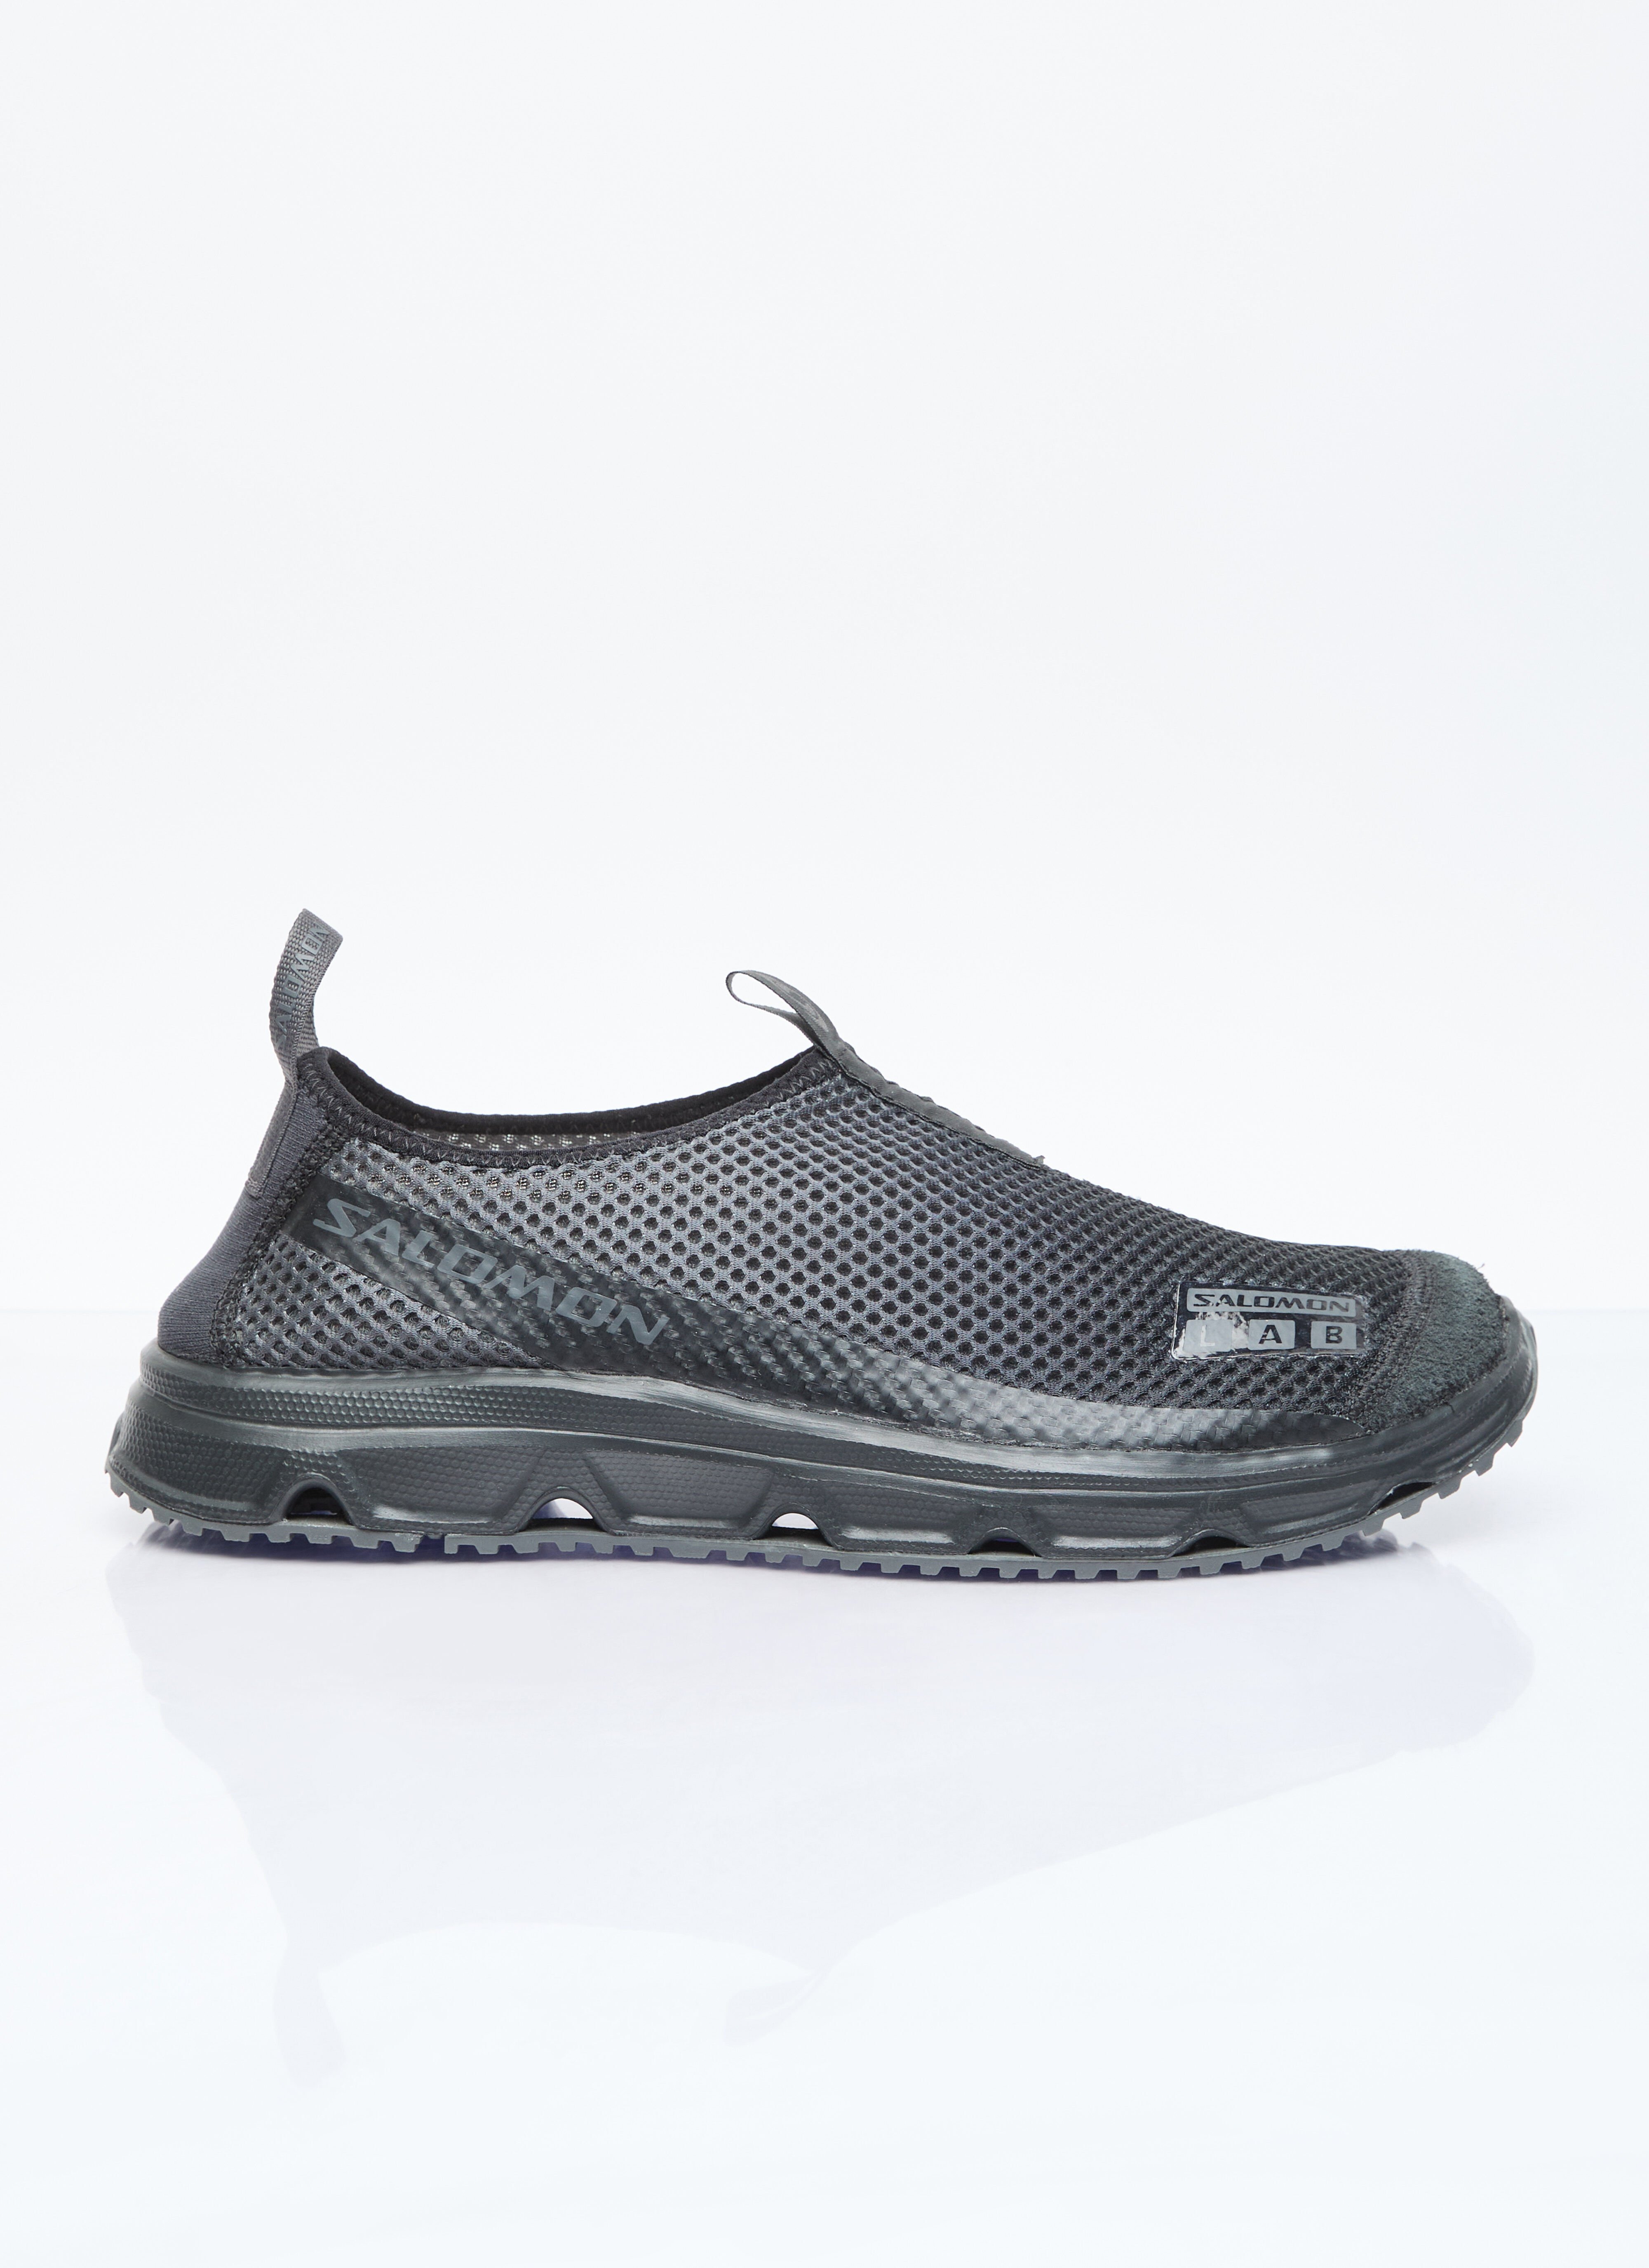 Salomon RX Moc 3.0 麂皮运动鞋 米色 sal0156011